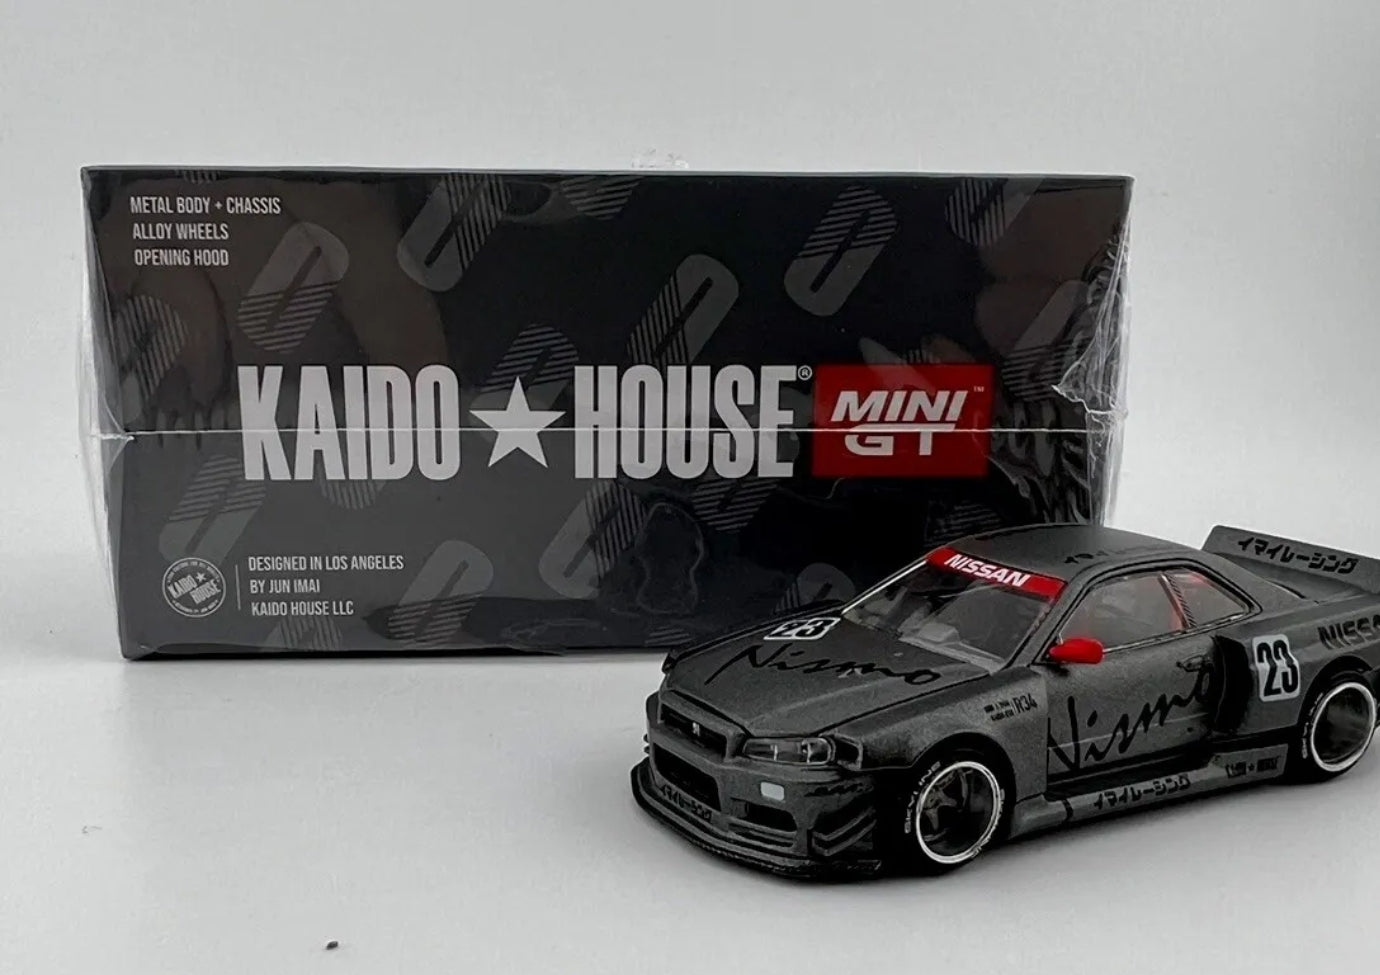 Nissan Skyline GT-R R34 NISMO - Kaido House KHMG056 - LTDEDN -